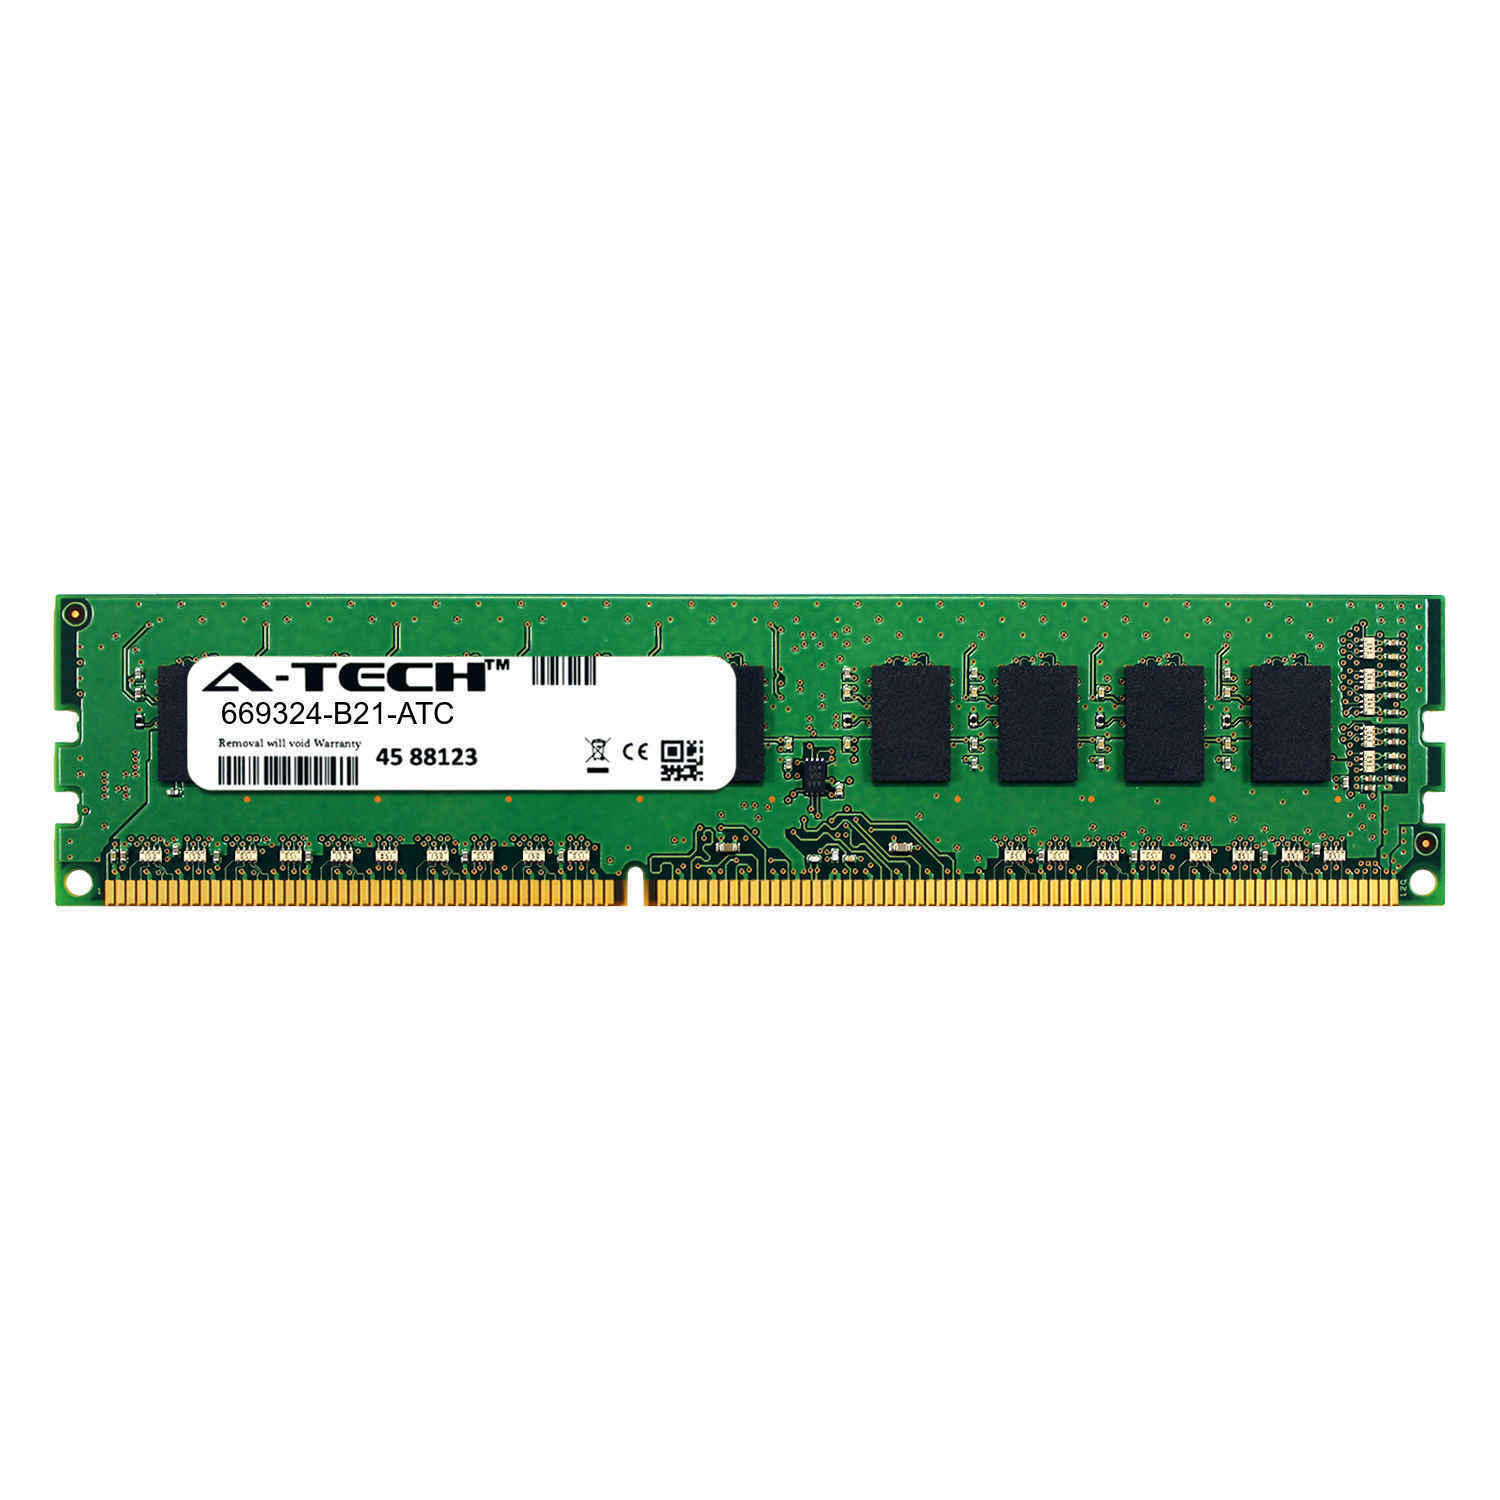 8GB DDR3 1600 PC3-12800E ECC UDIMM (HP 669324-B21 Equivalent) Server Memory RAM